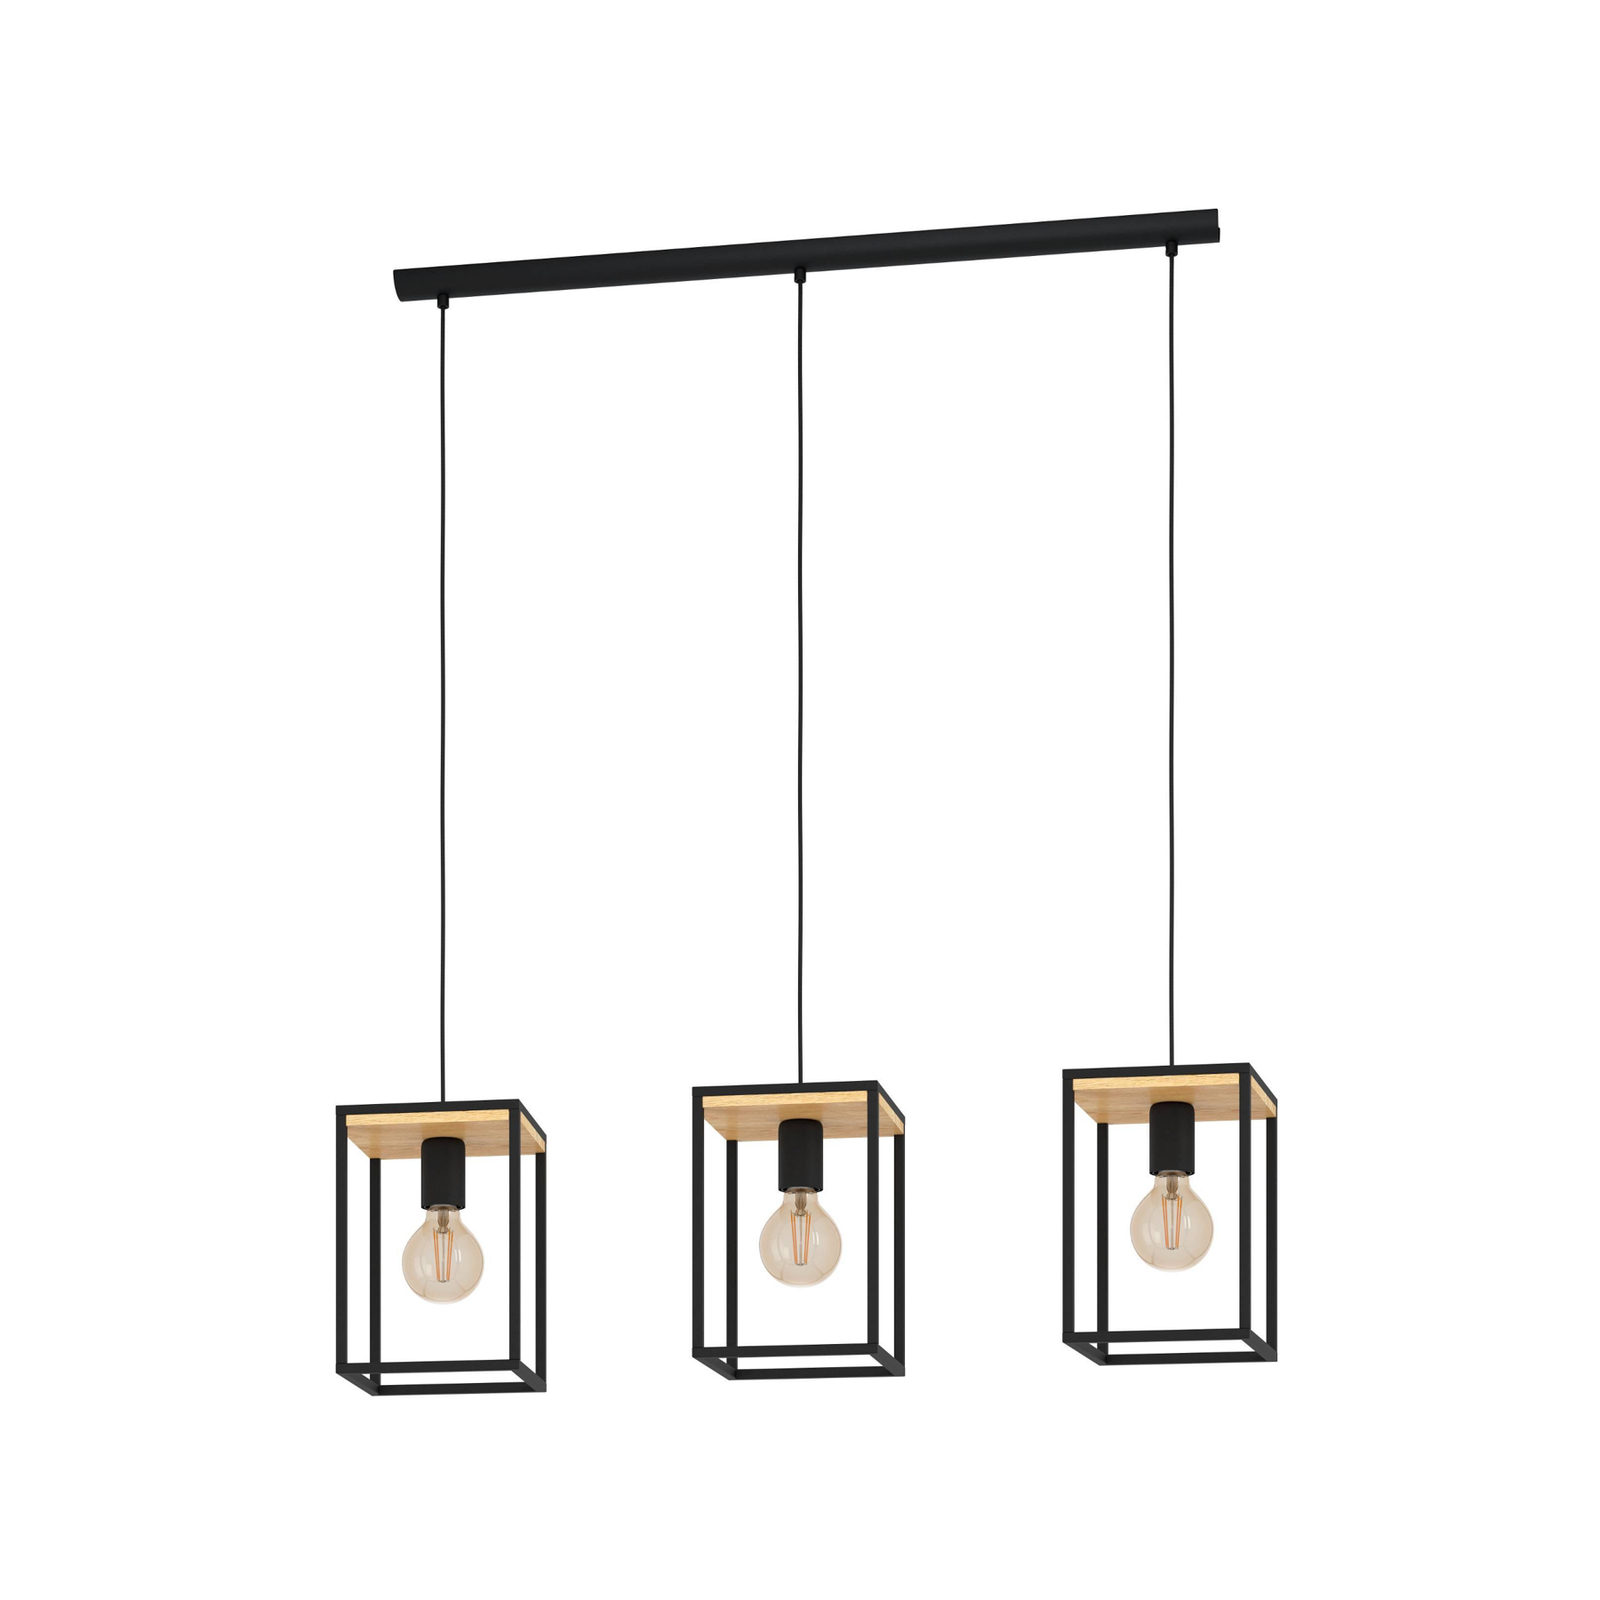 Hanglamp Libertad, lengte 88 cm, zwart/hout, 3-lamps.